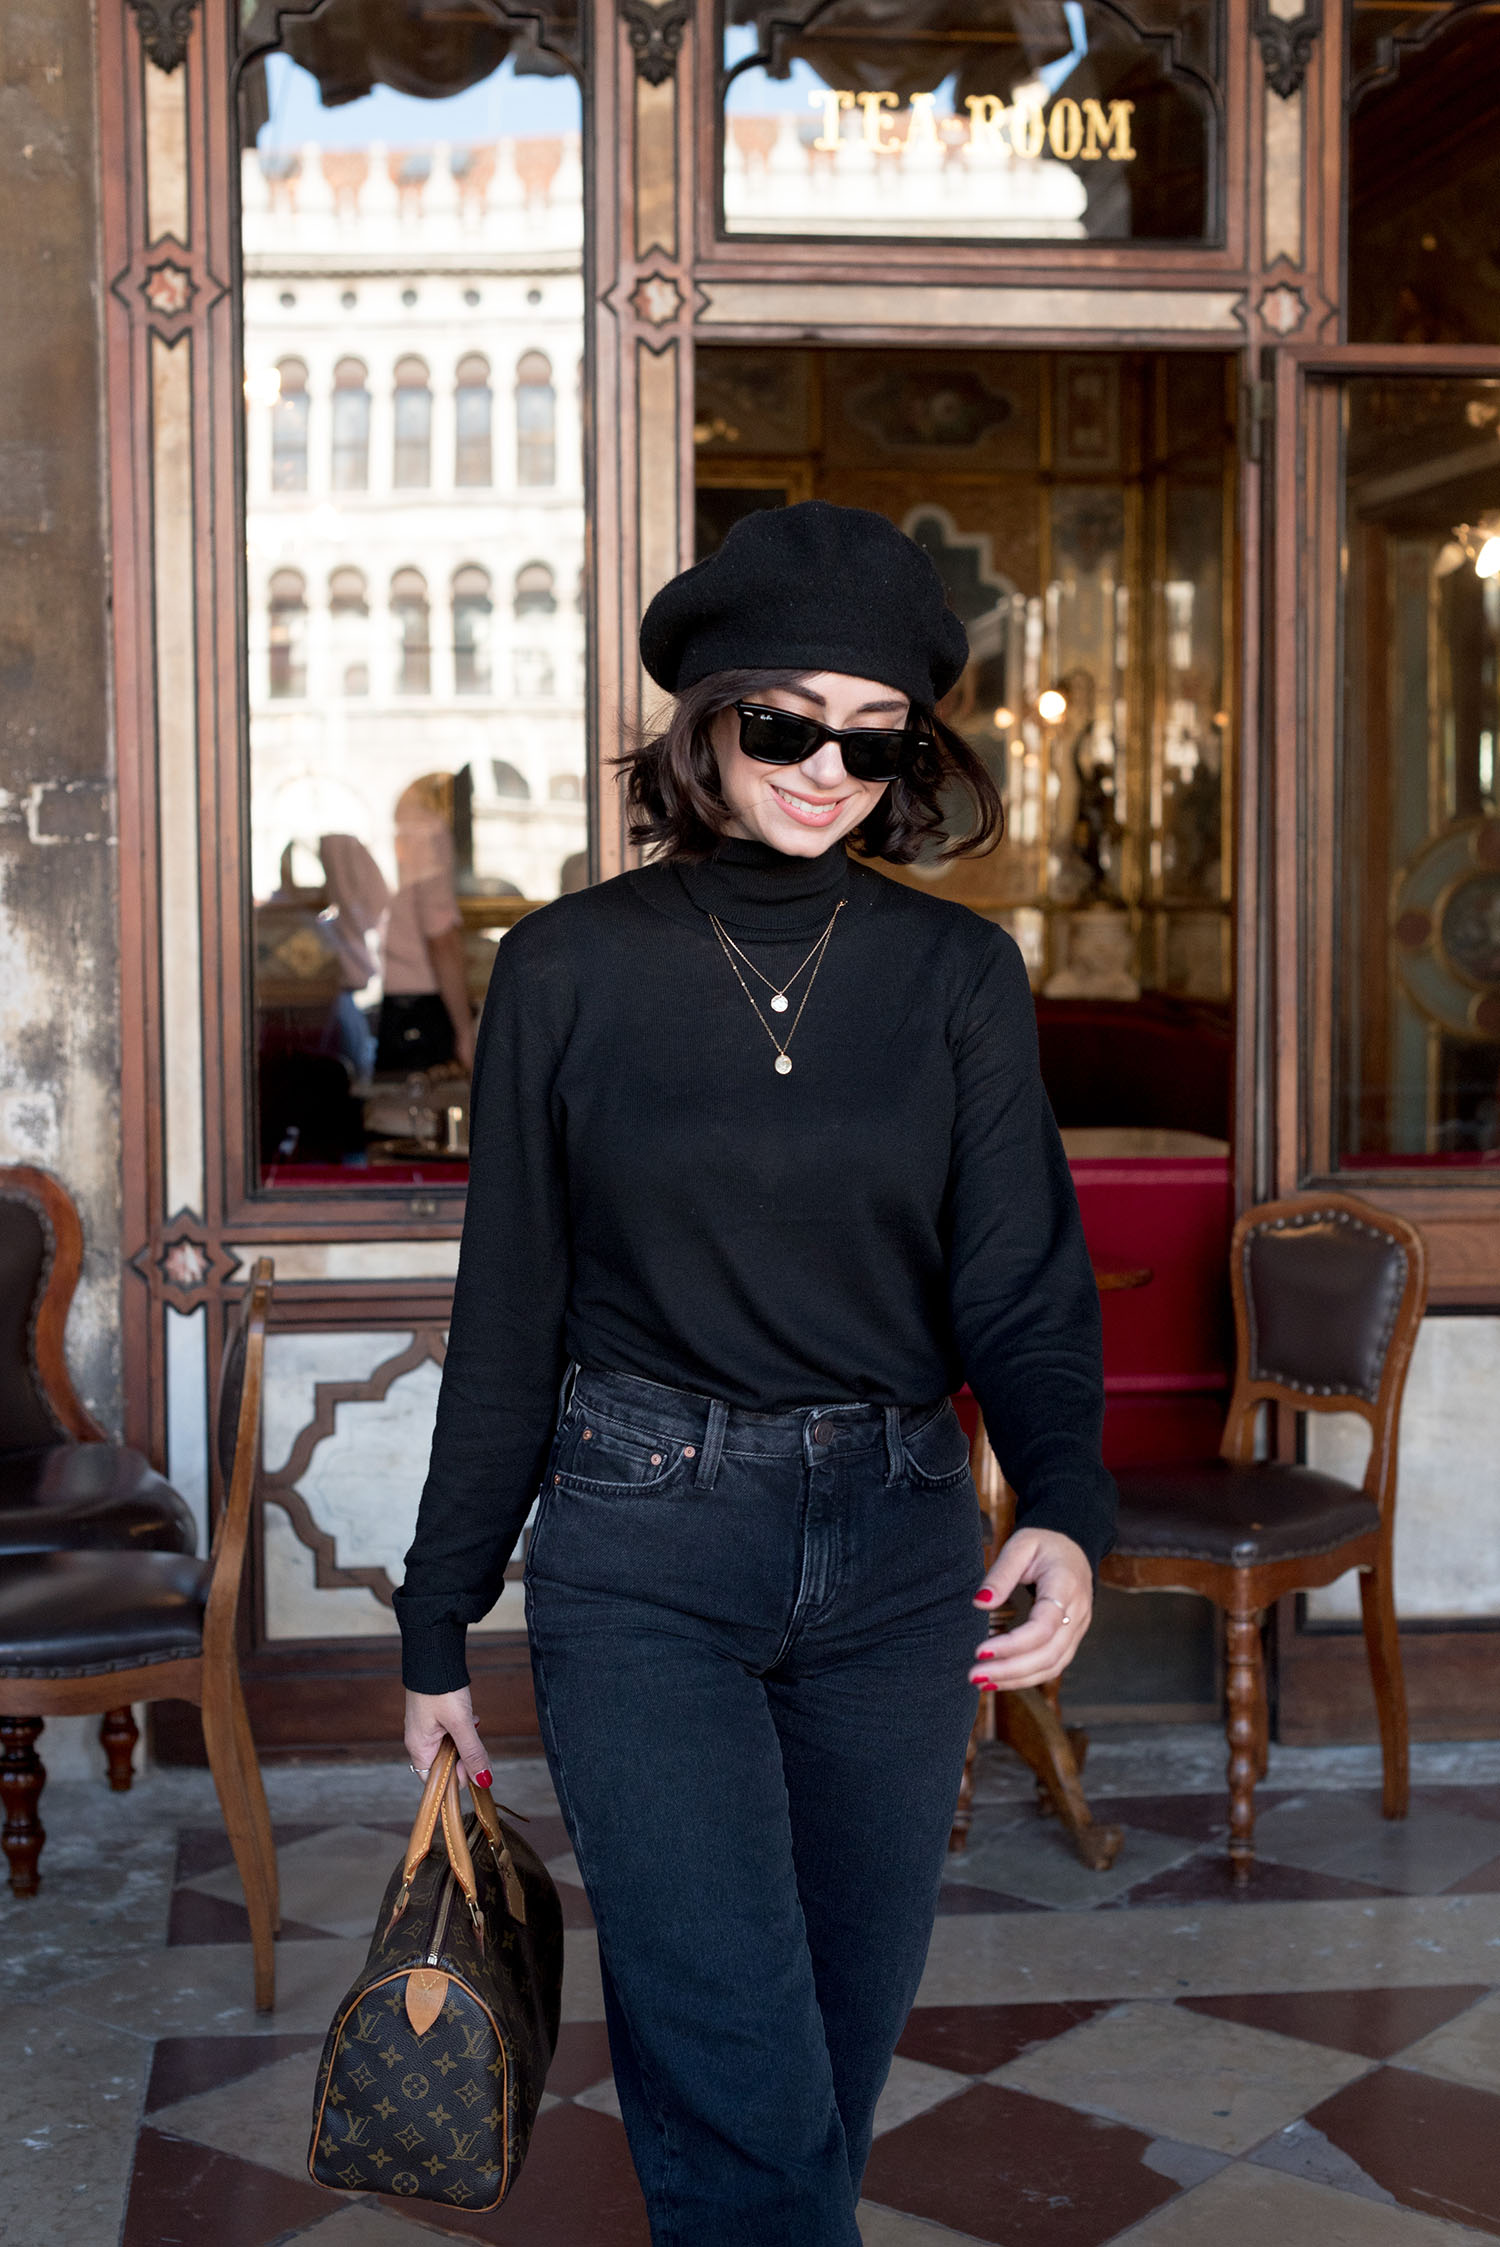 Portrait of top Canadian style blogger Cee Fardoe of Coco & Vera at Caffe Floriane, wearing RayBan Wayfarer sunglasses and carrying a Louis Vuitton Speedy 25 handbag